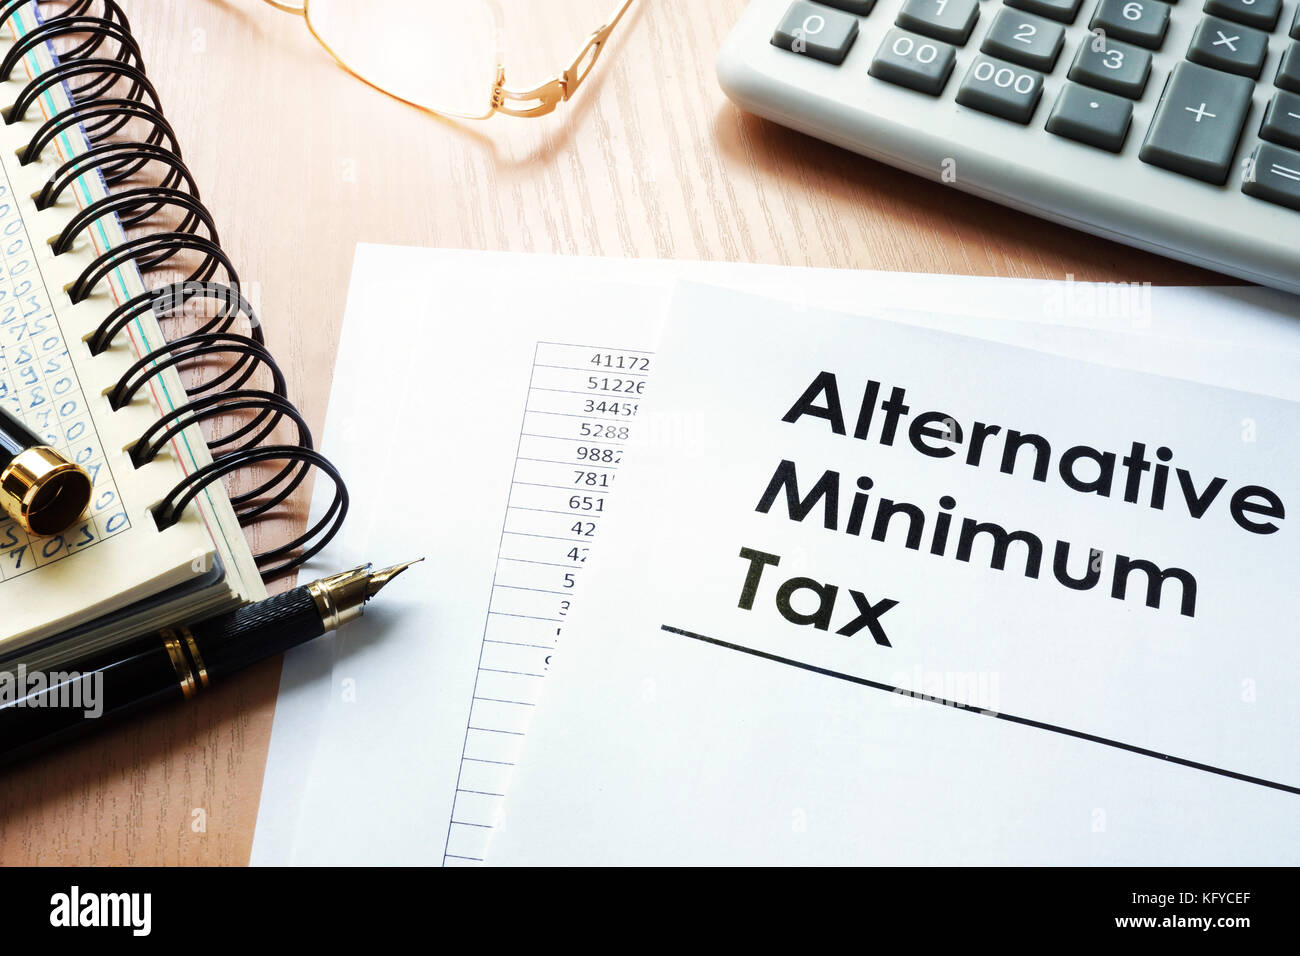 Alternative Minimum Tax (AMT) and  calculator on a desk. Stock Photo